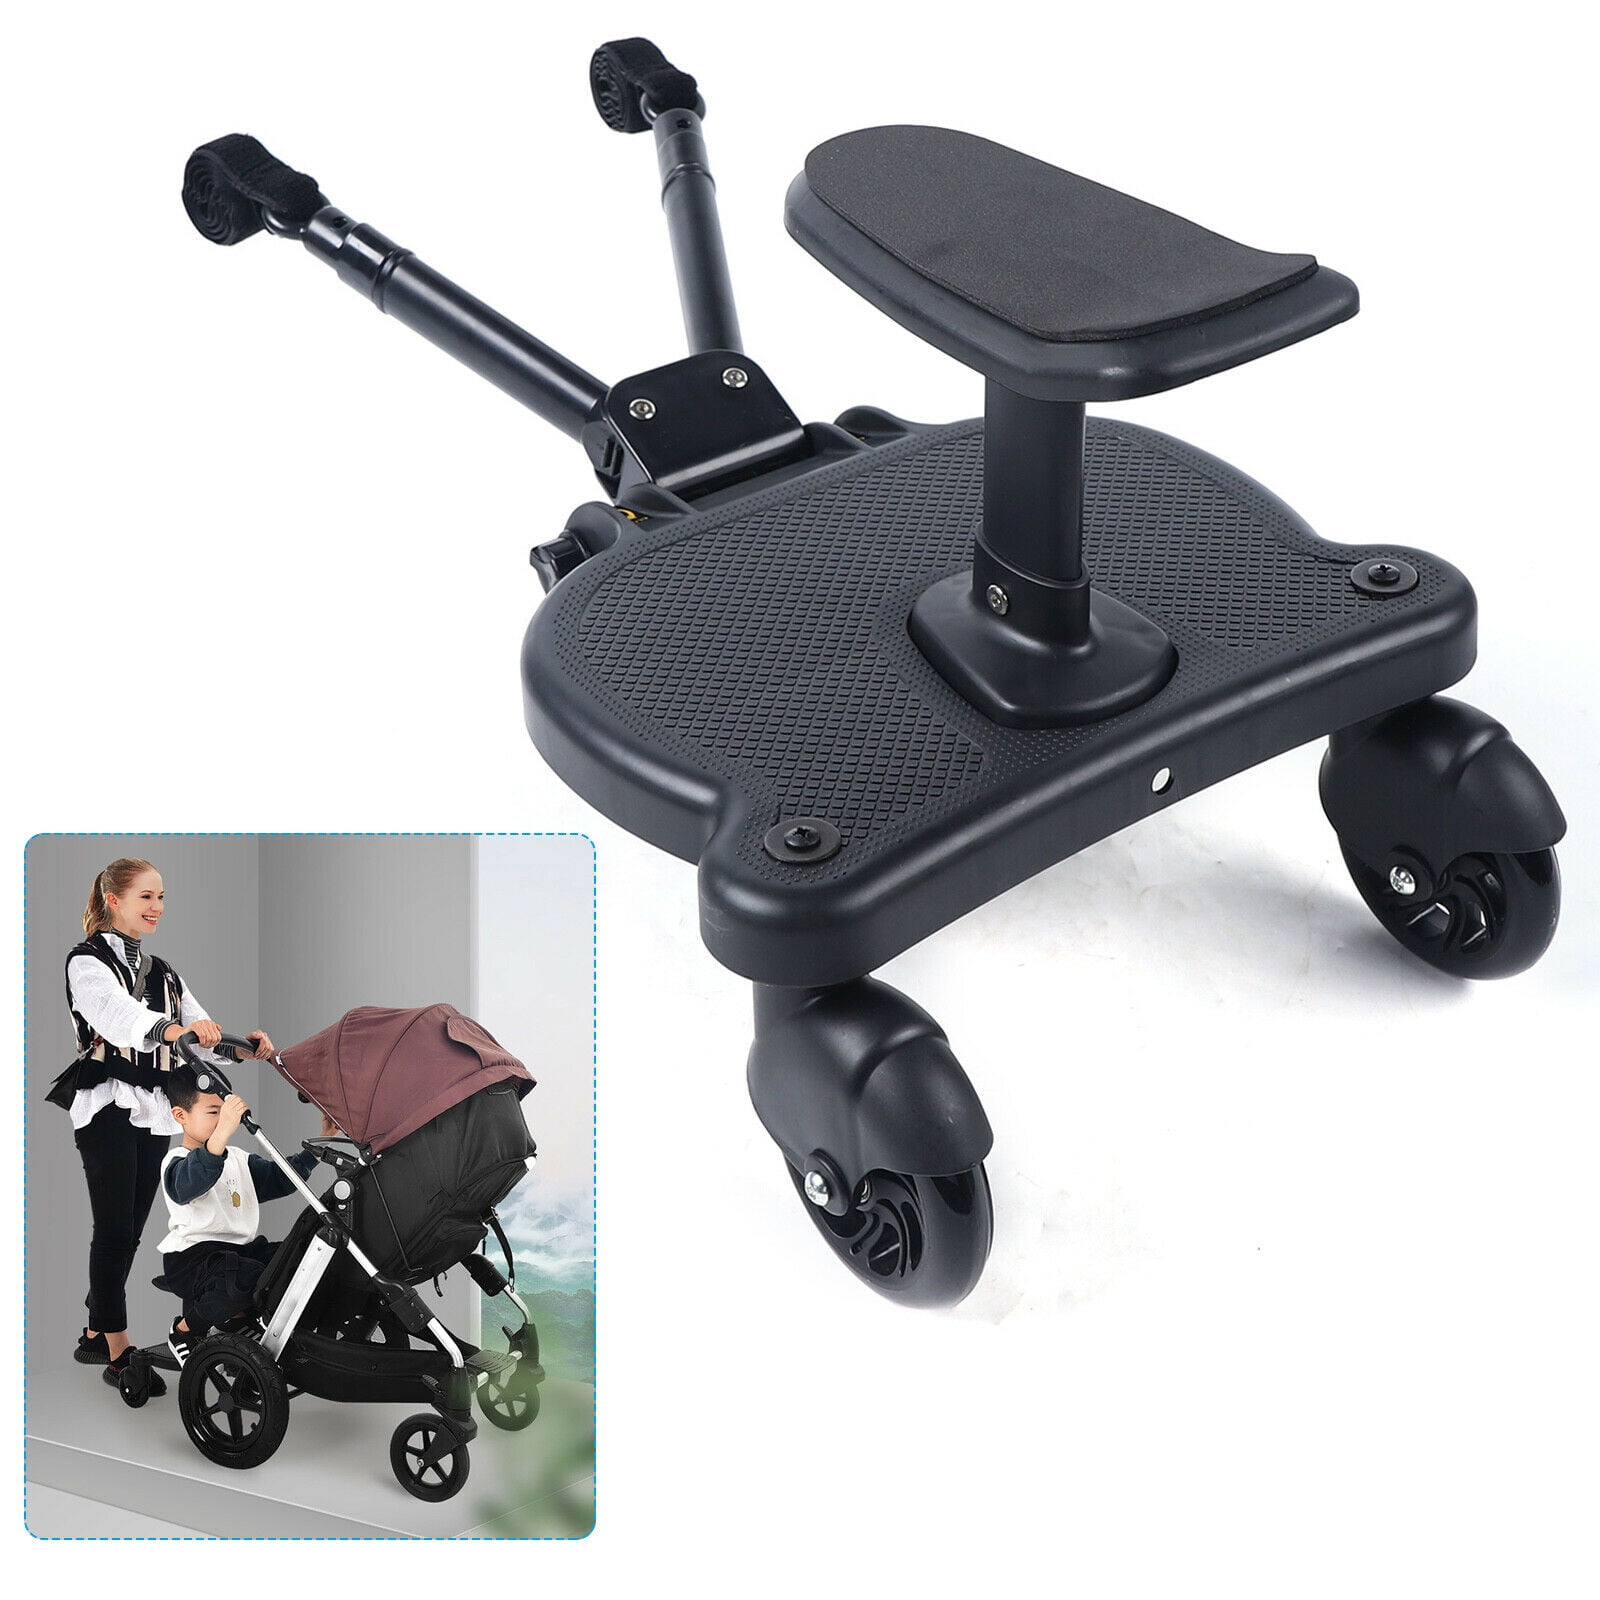 Black Wheel 2in1 Comfort Stroller Ride Board Holds Children Up to 55lbs Universal Stroller Board with Seat Sturdy Wheeled Board Stroller Pedal Stroller Accessories 